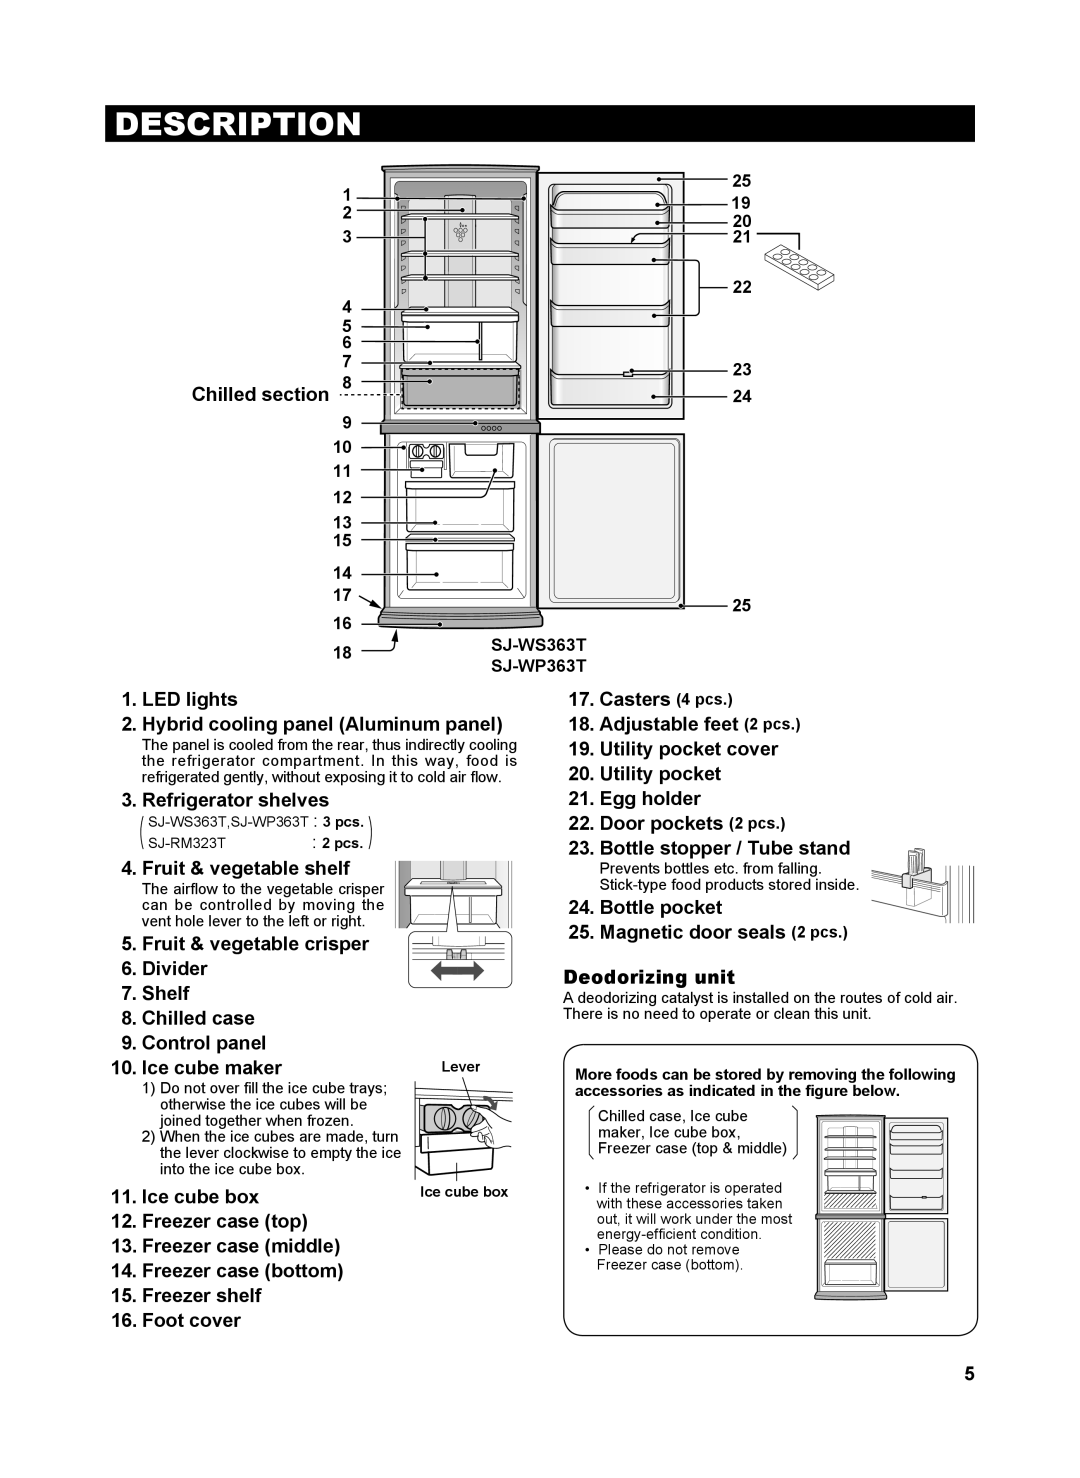 Sharp SJ-WS363T Description, Chilled section, LED lights 2. Hybrid cooling panel Aluminum panel, Refrigerator shelves 